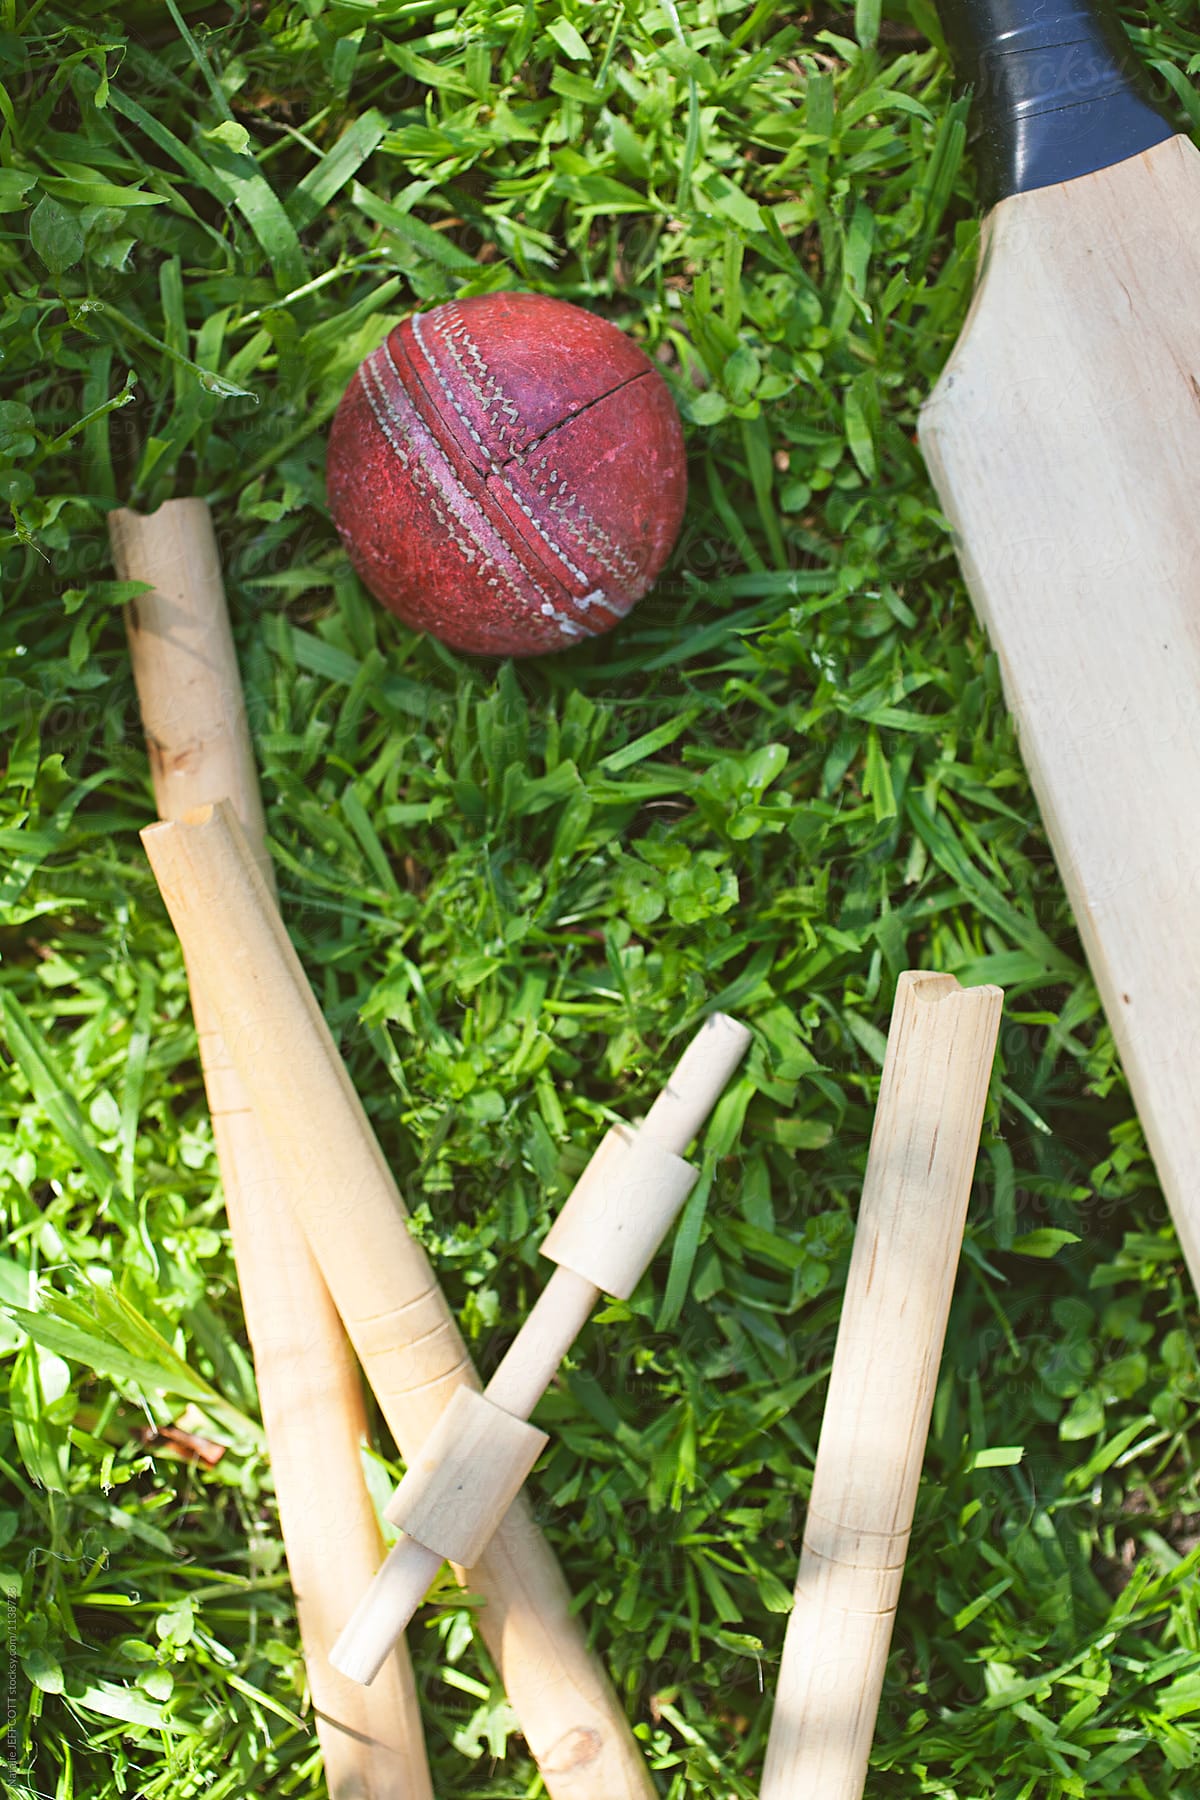 backyard cricket in Australia - bat, wicket and stumps on grass